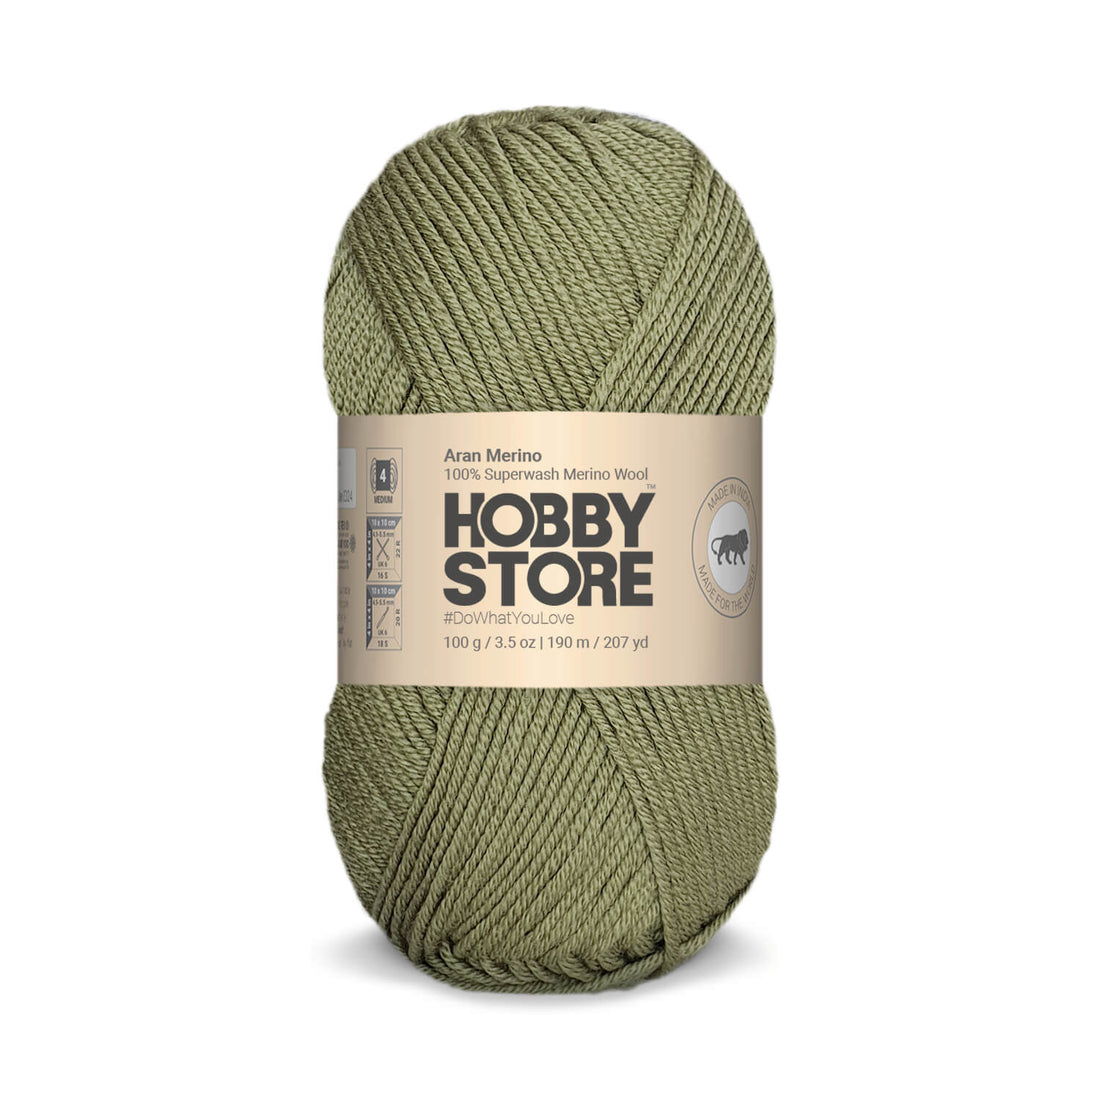 Aran Merino Wool by Hobby Store - Lincoln AM019